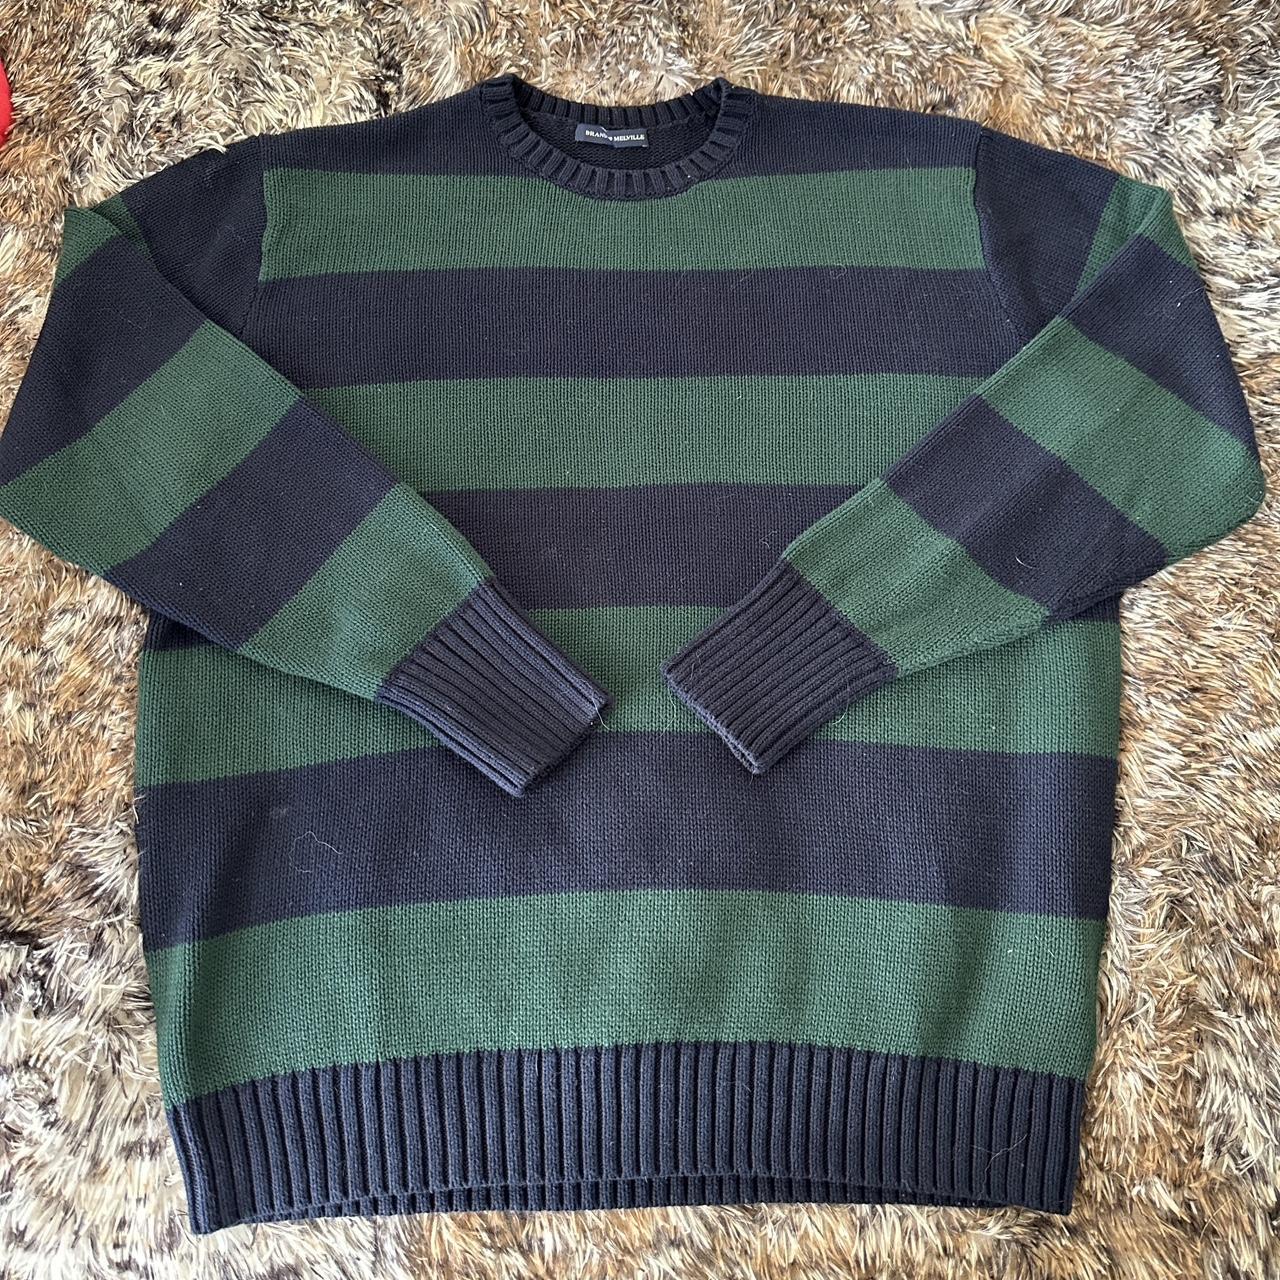 Brandy melville-tate-sweater - Depop